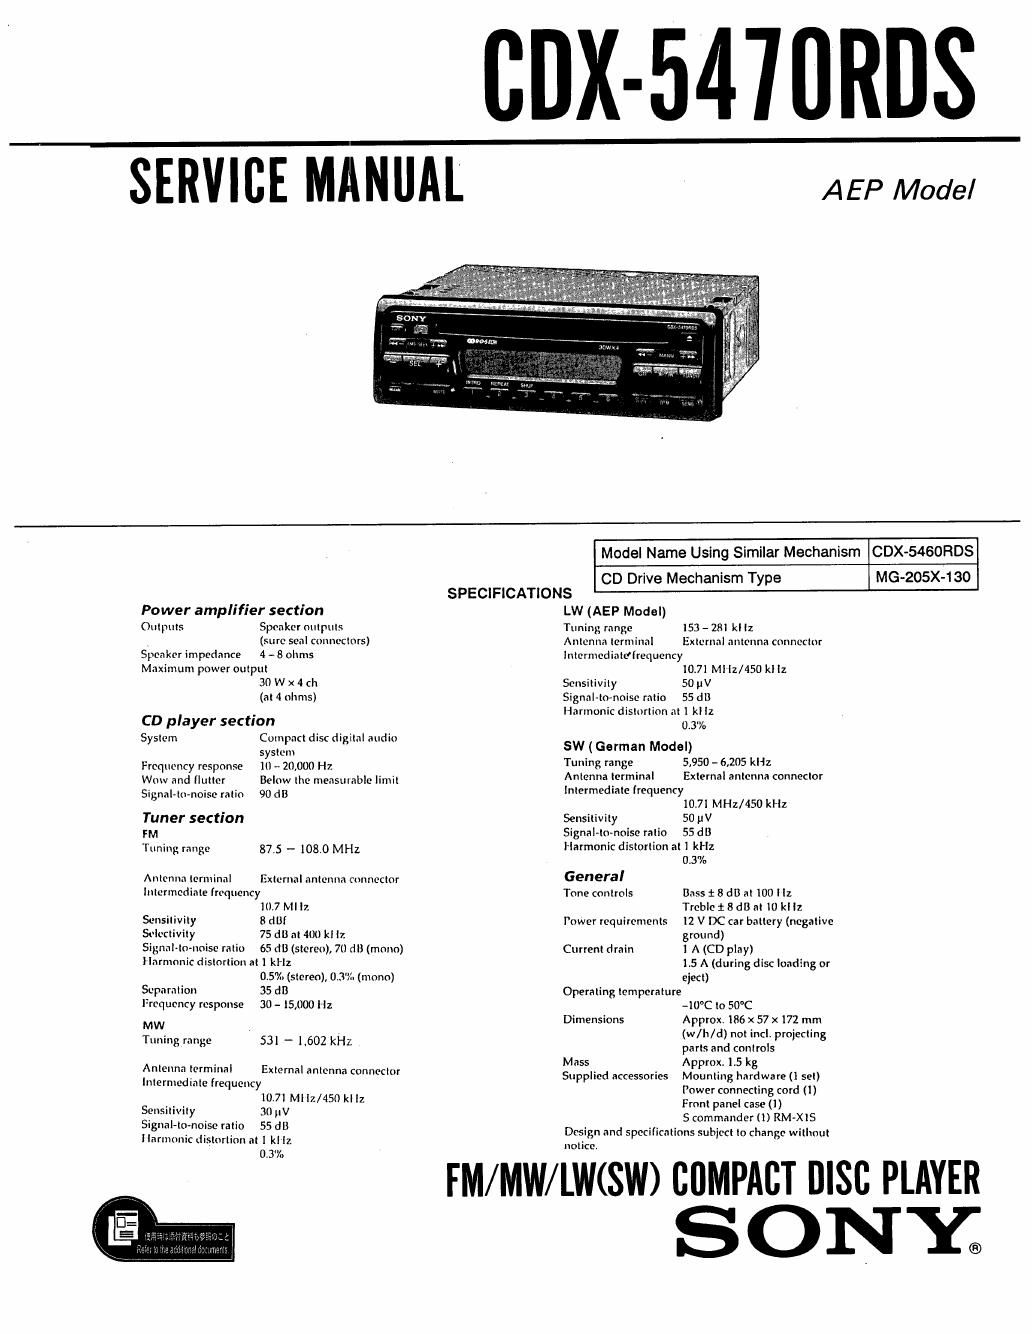 sony cdx 5470 rds service manual